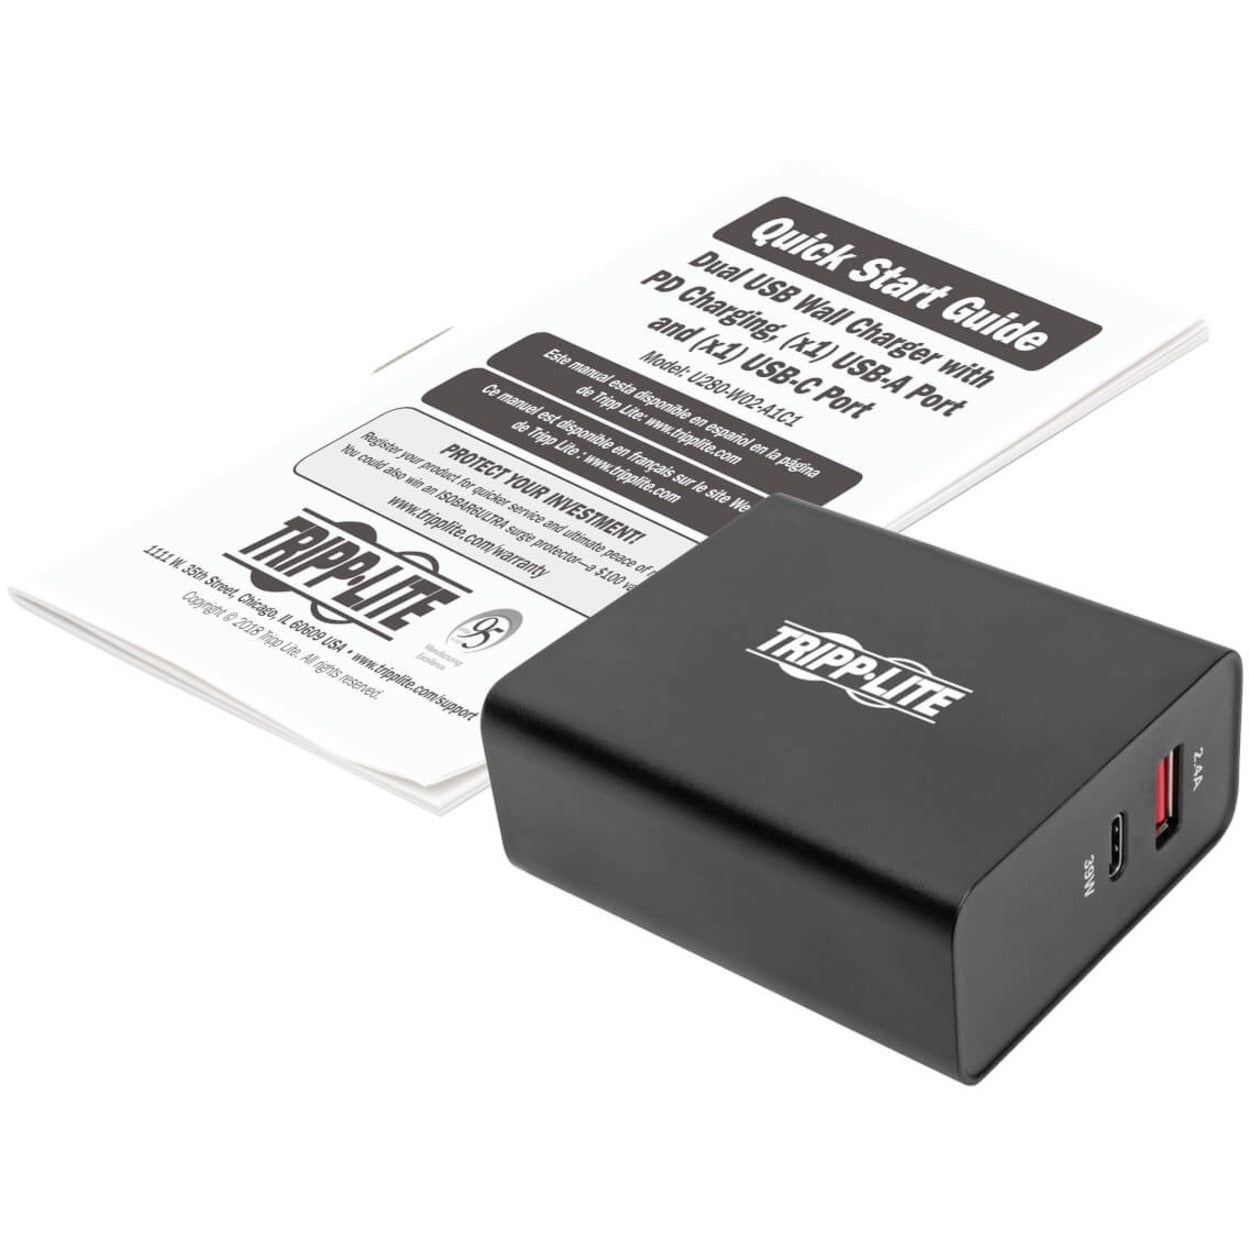 تريب لايت U280-W02-A1C1 محول تيار متردد ، شاحن حائط USB بـ 2 منفذ USB من نوع C ، 51 وات ، ضمان لمدة 2 سنة Tripp Lite